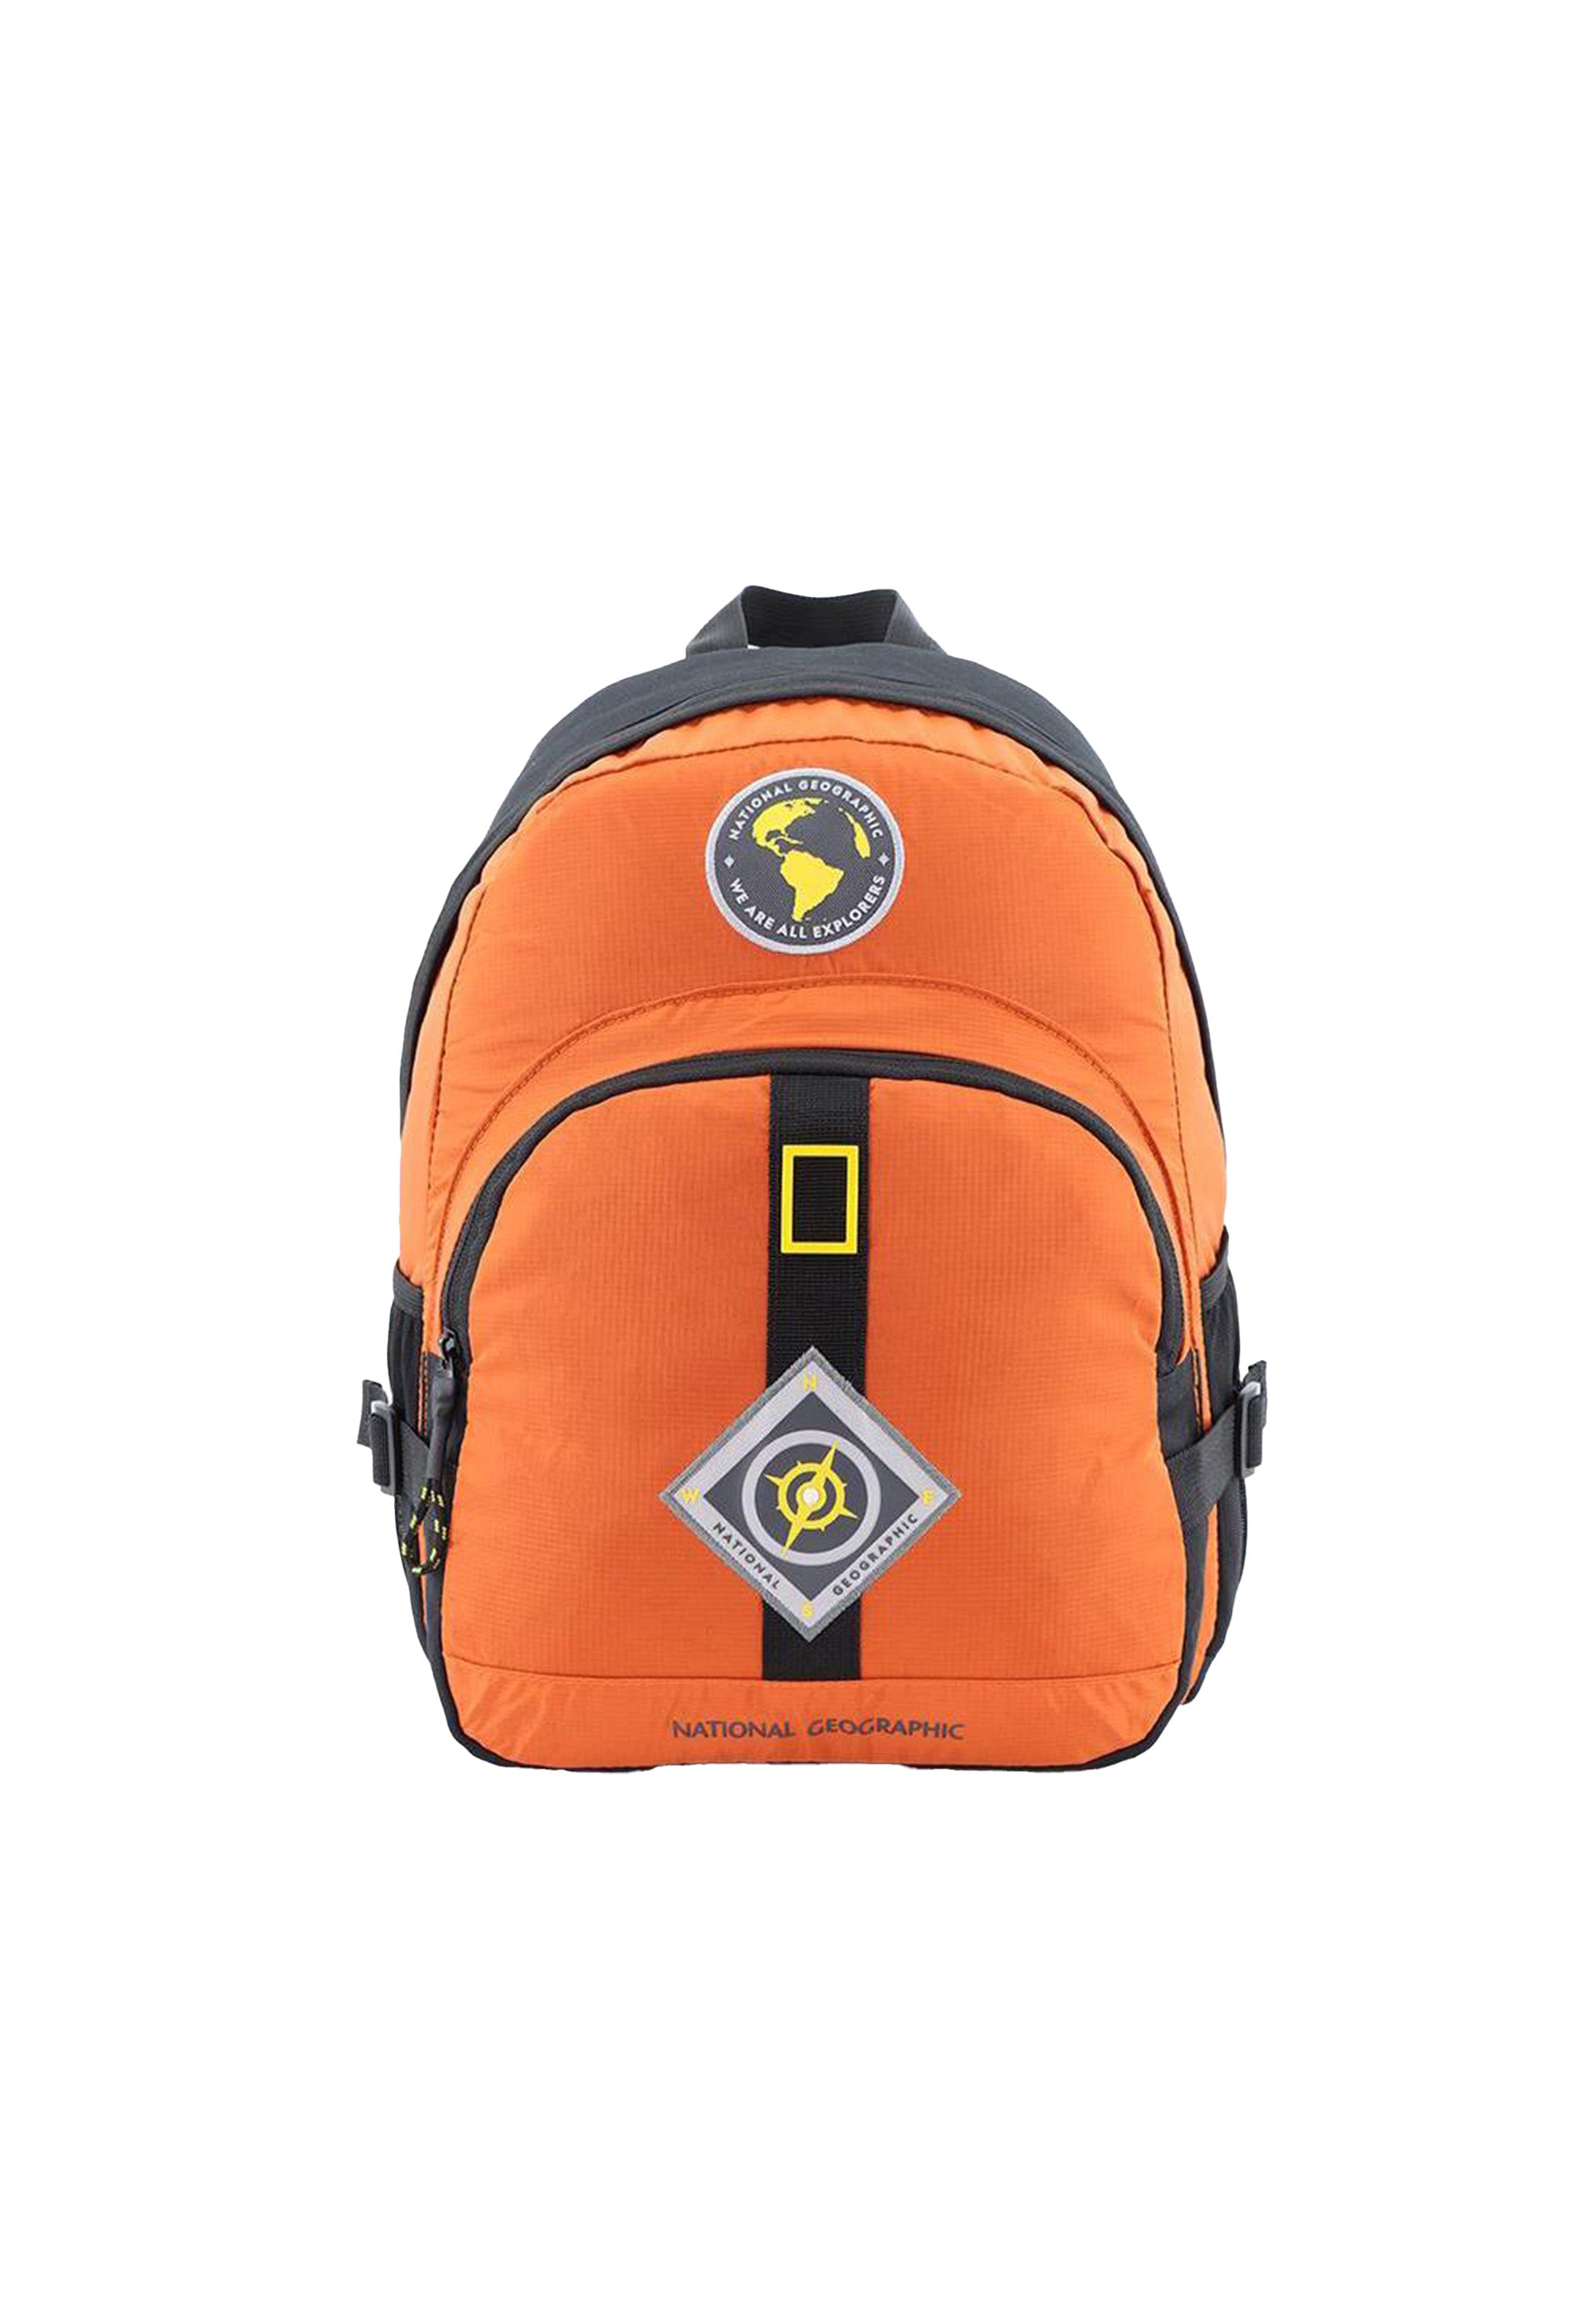 National Geographic - New Explorer Rucksack / Outdoor-Rucksack / Laptop-Rucksack - 18L - Orange